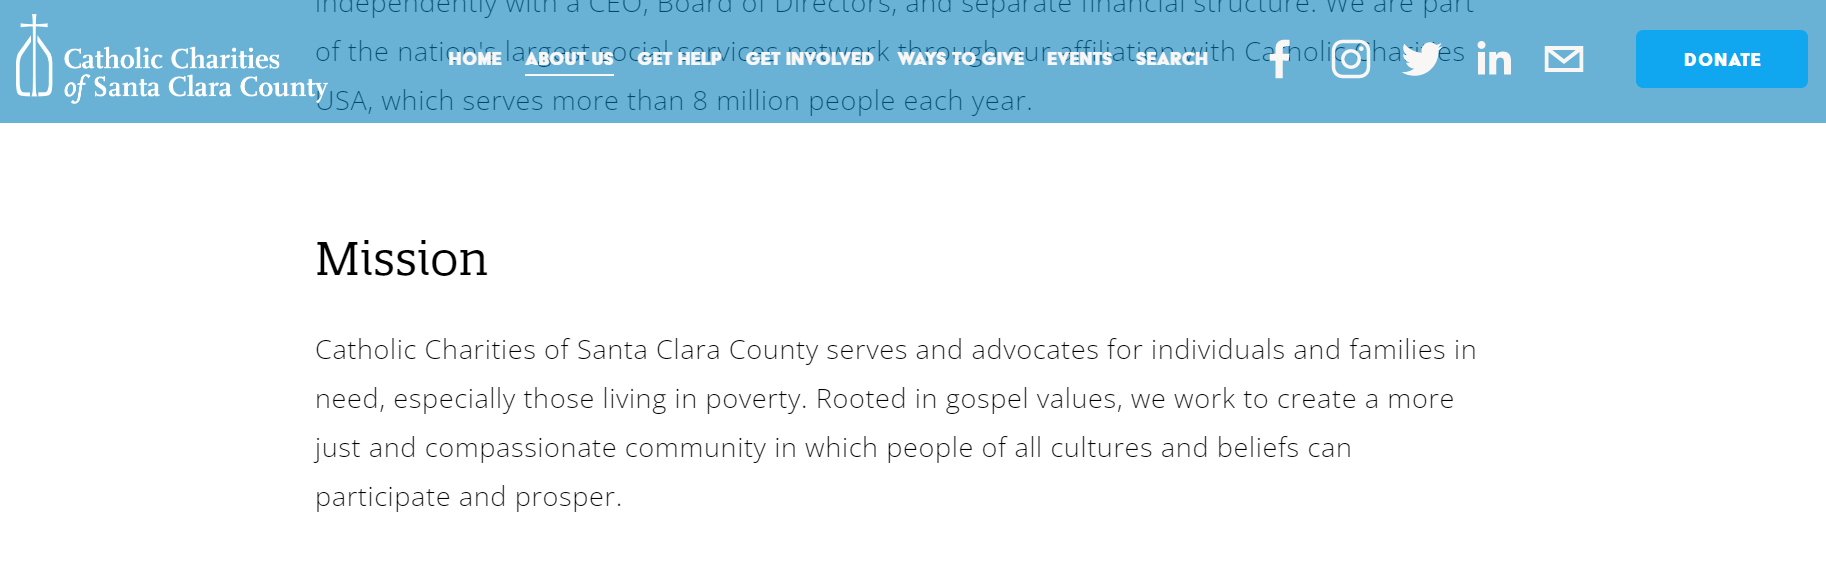 Catholic Charities of Santa Clara County's mission statement. 